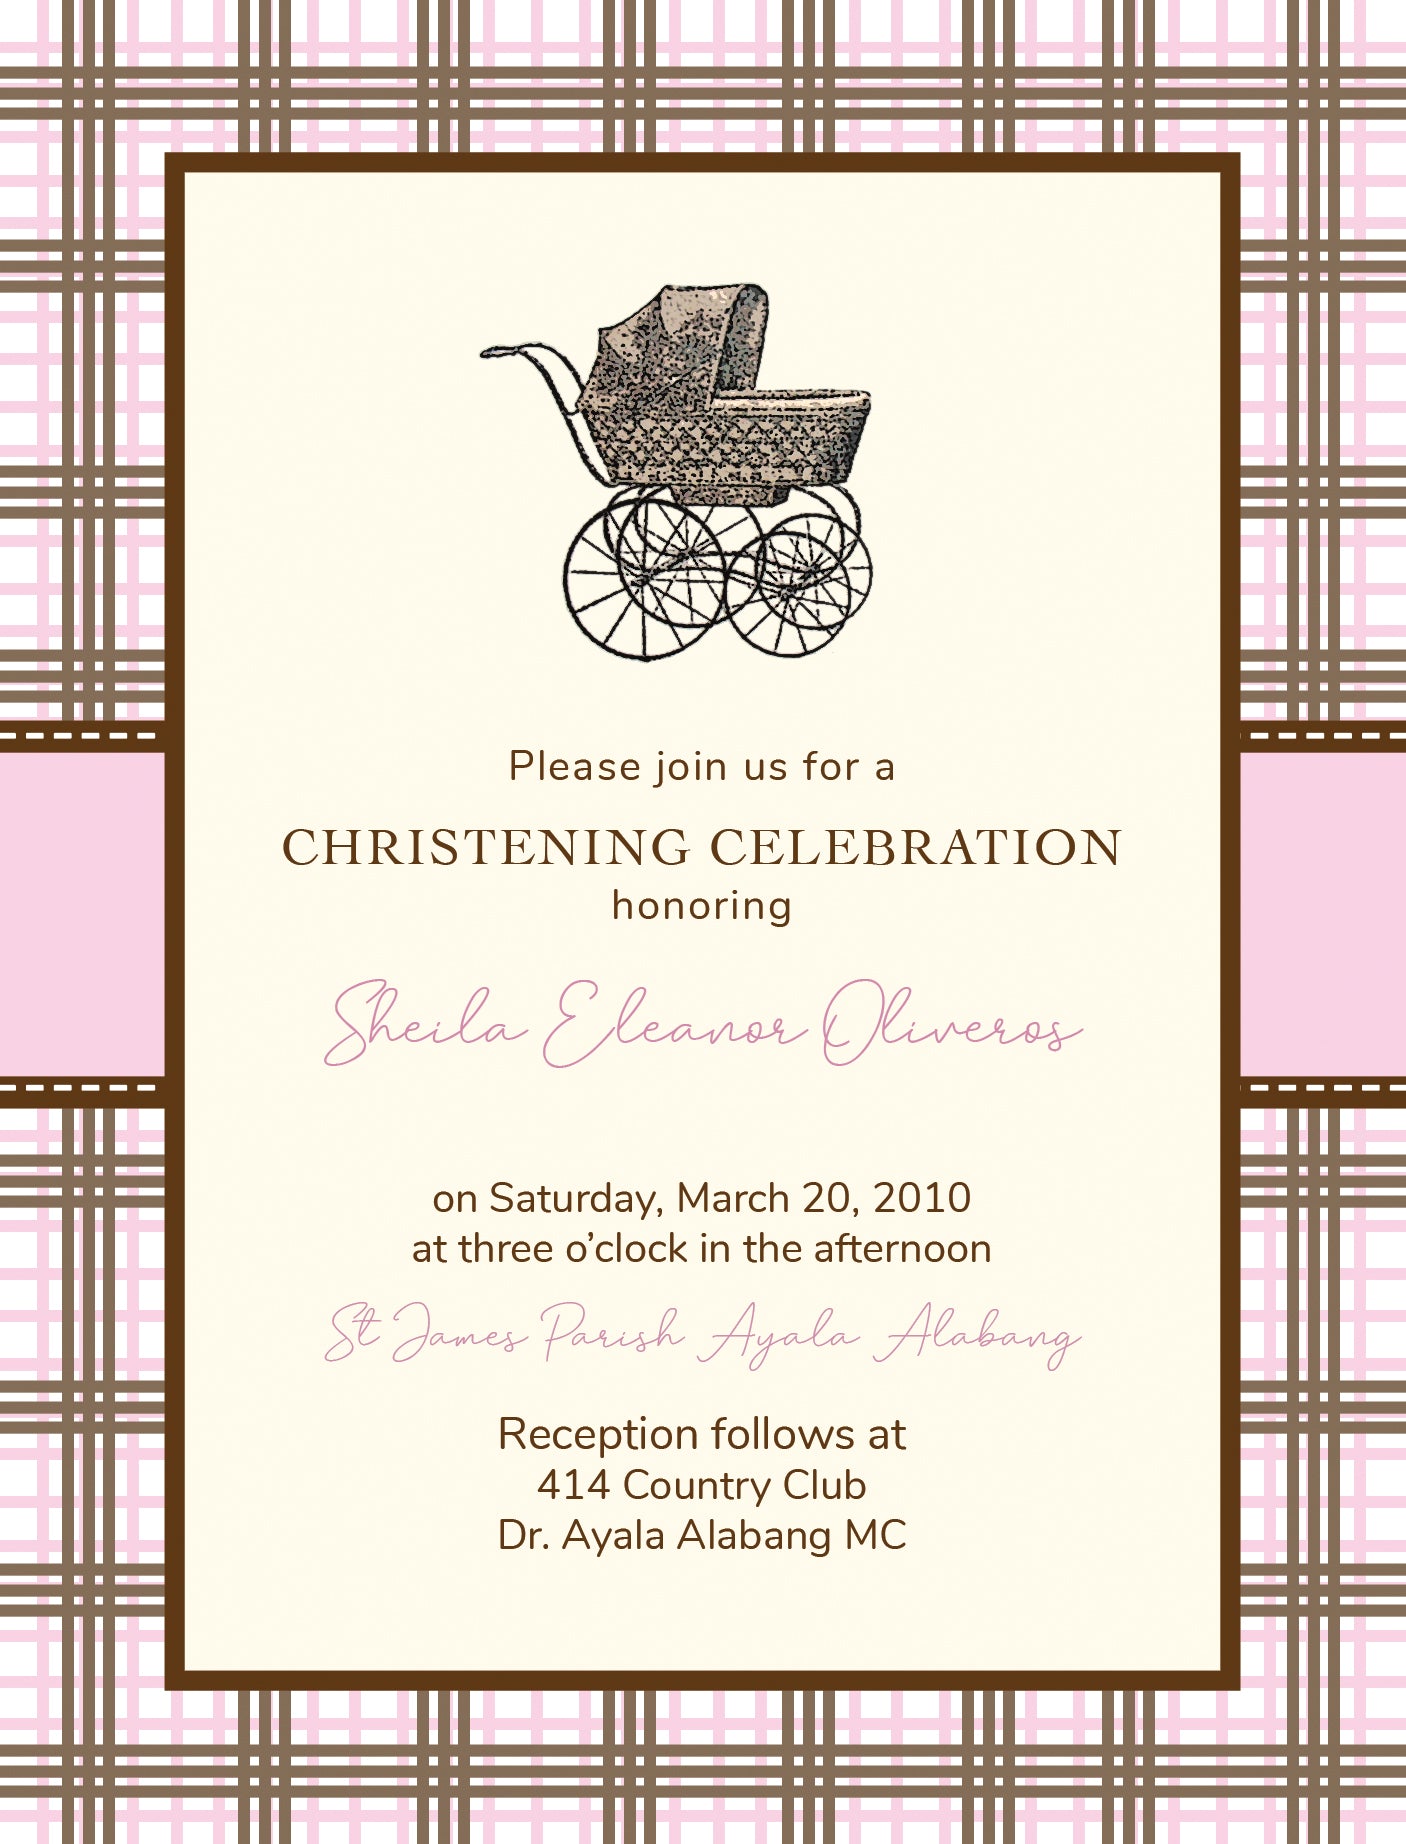 Sheila Christening Invitation